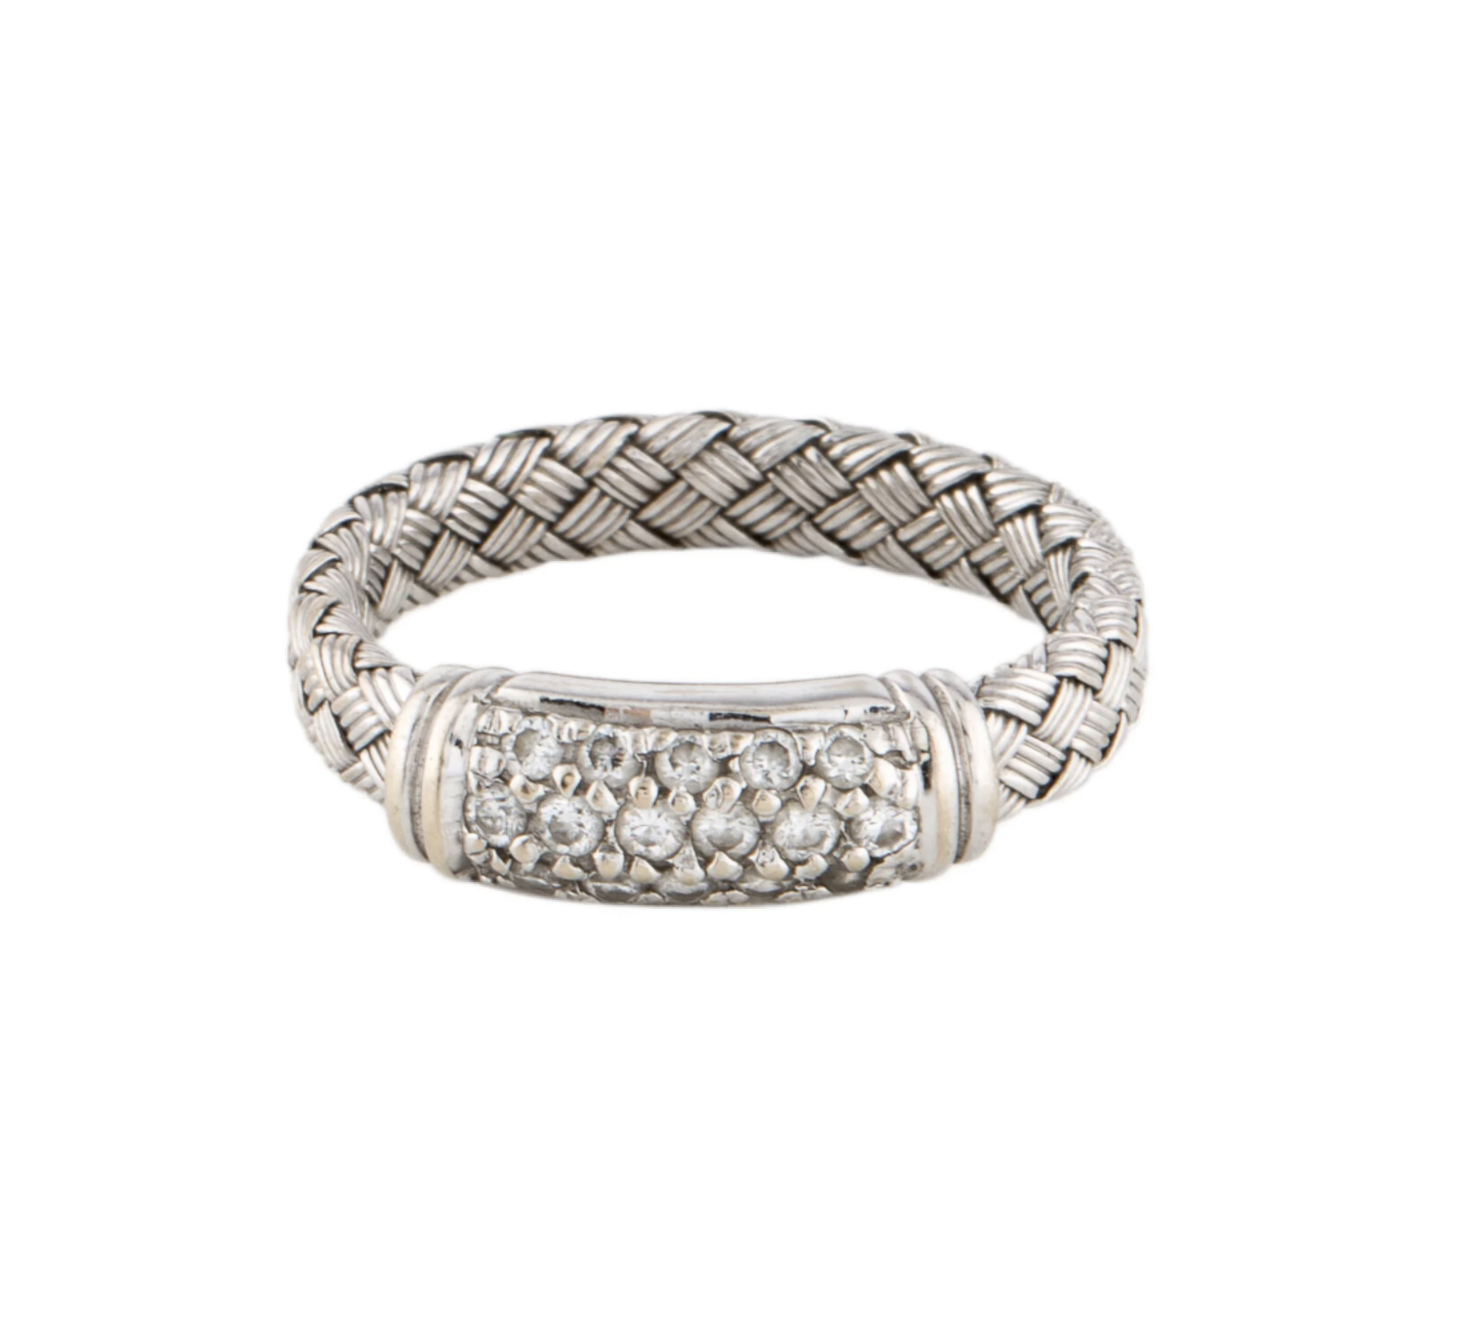 18K WG Silk Weave Ring with Diamonds